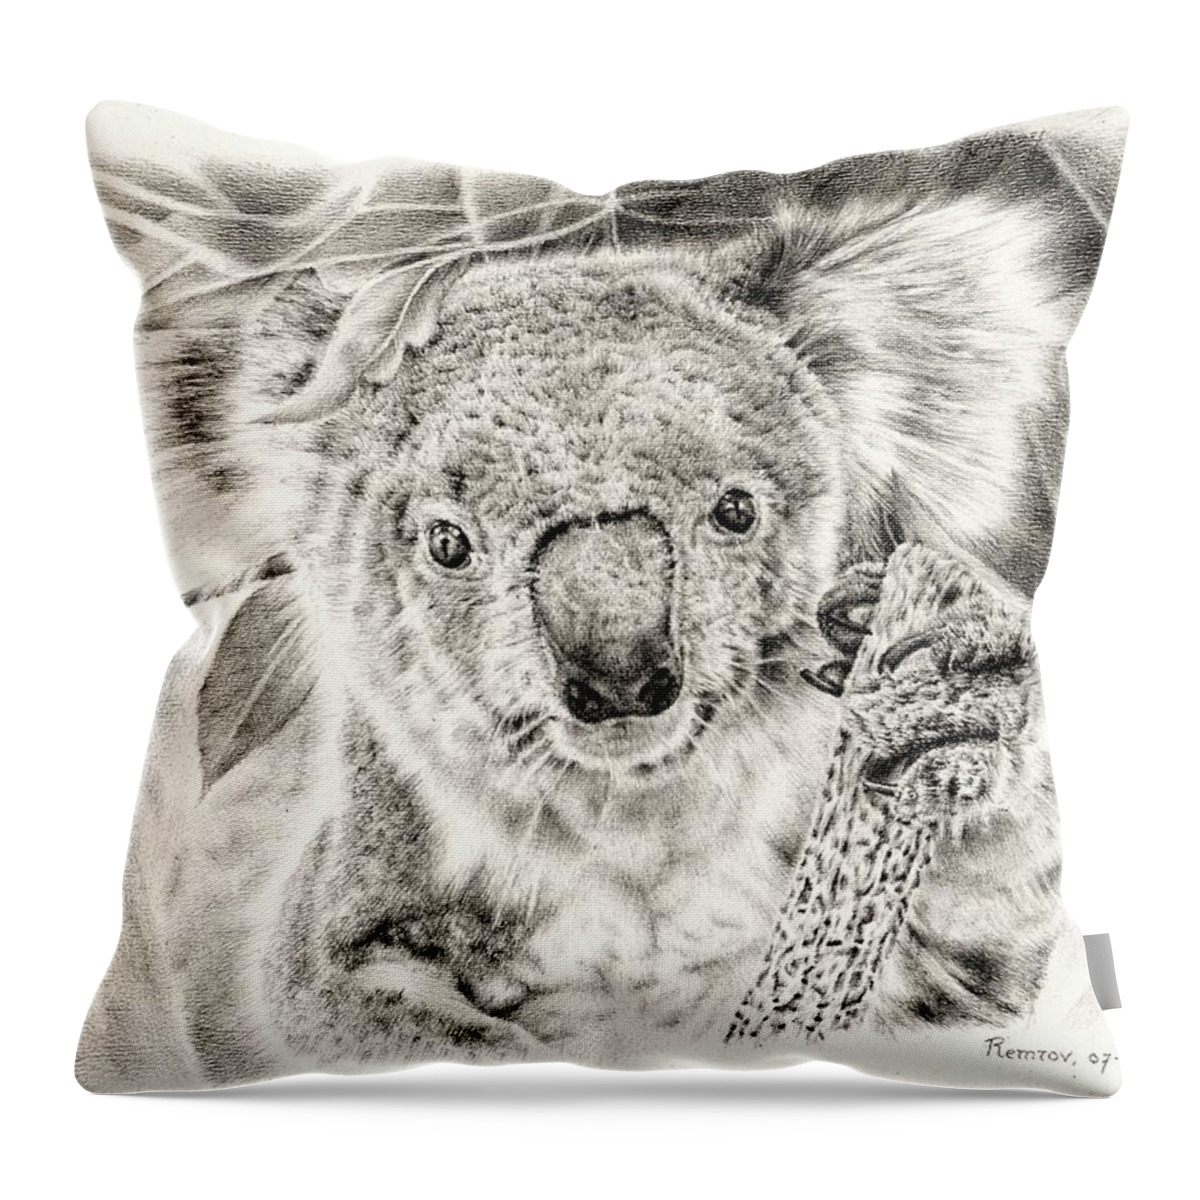 Koala Throw Pillow featuring the drawing Koala Garage Girl by Casey 'Remrov' Vormer